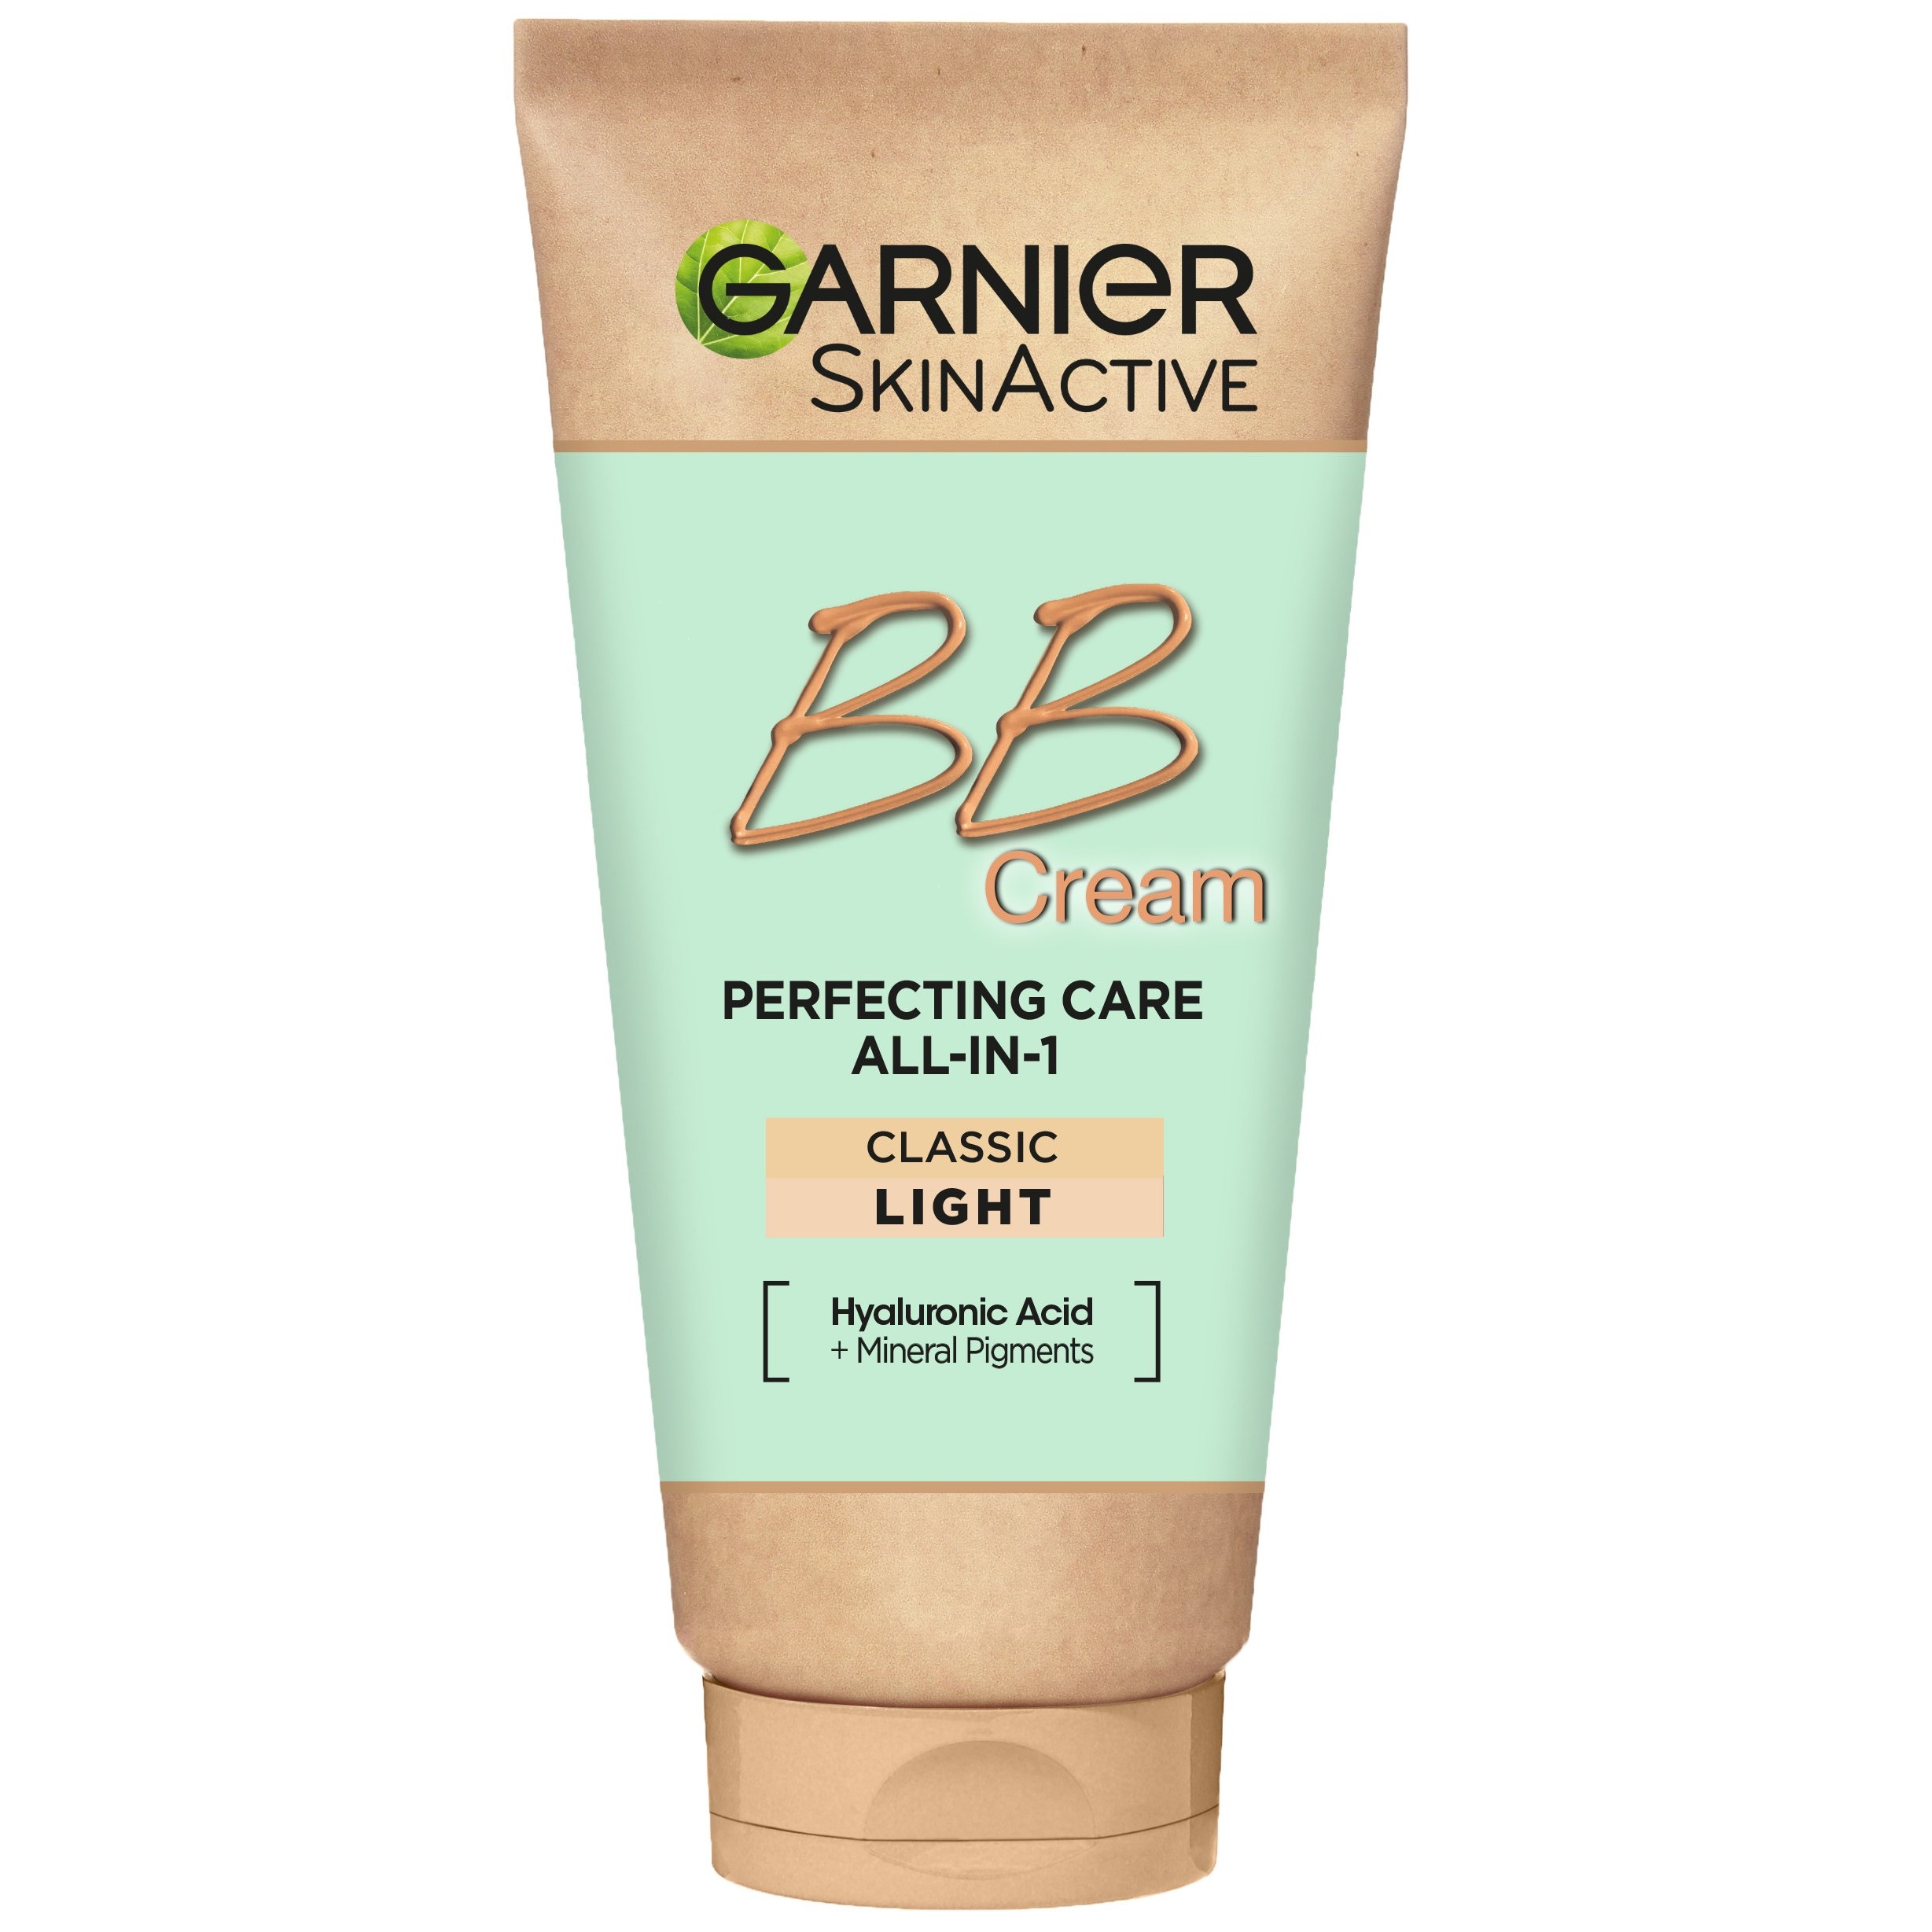 Garnier SkinActive BB Cream Perfecting Care All-In-1 Light